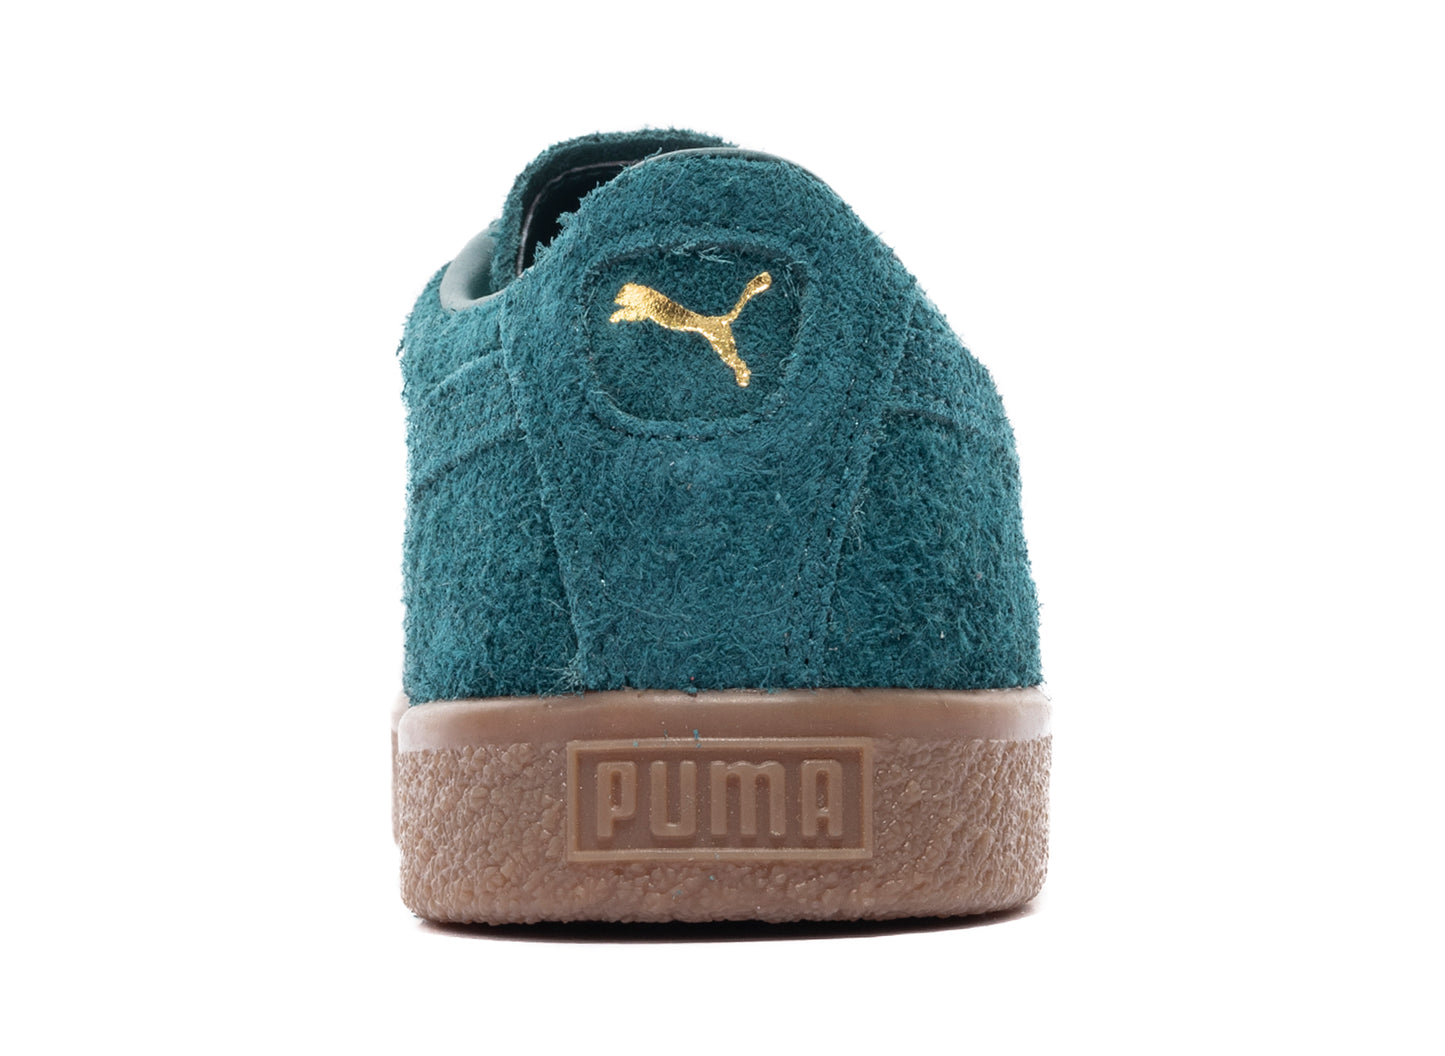 Puma VTG Hairy Suede in Varsity Green & Gum